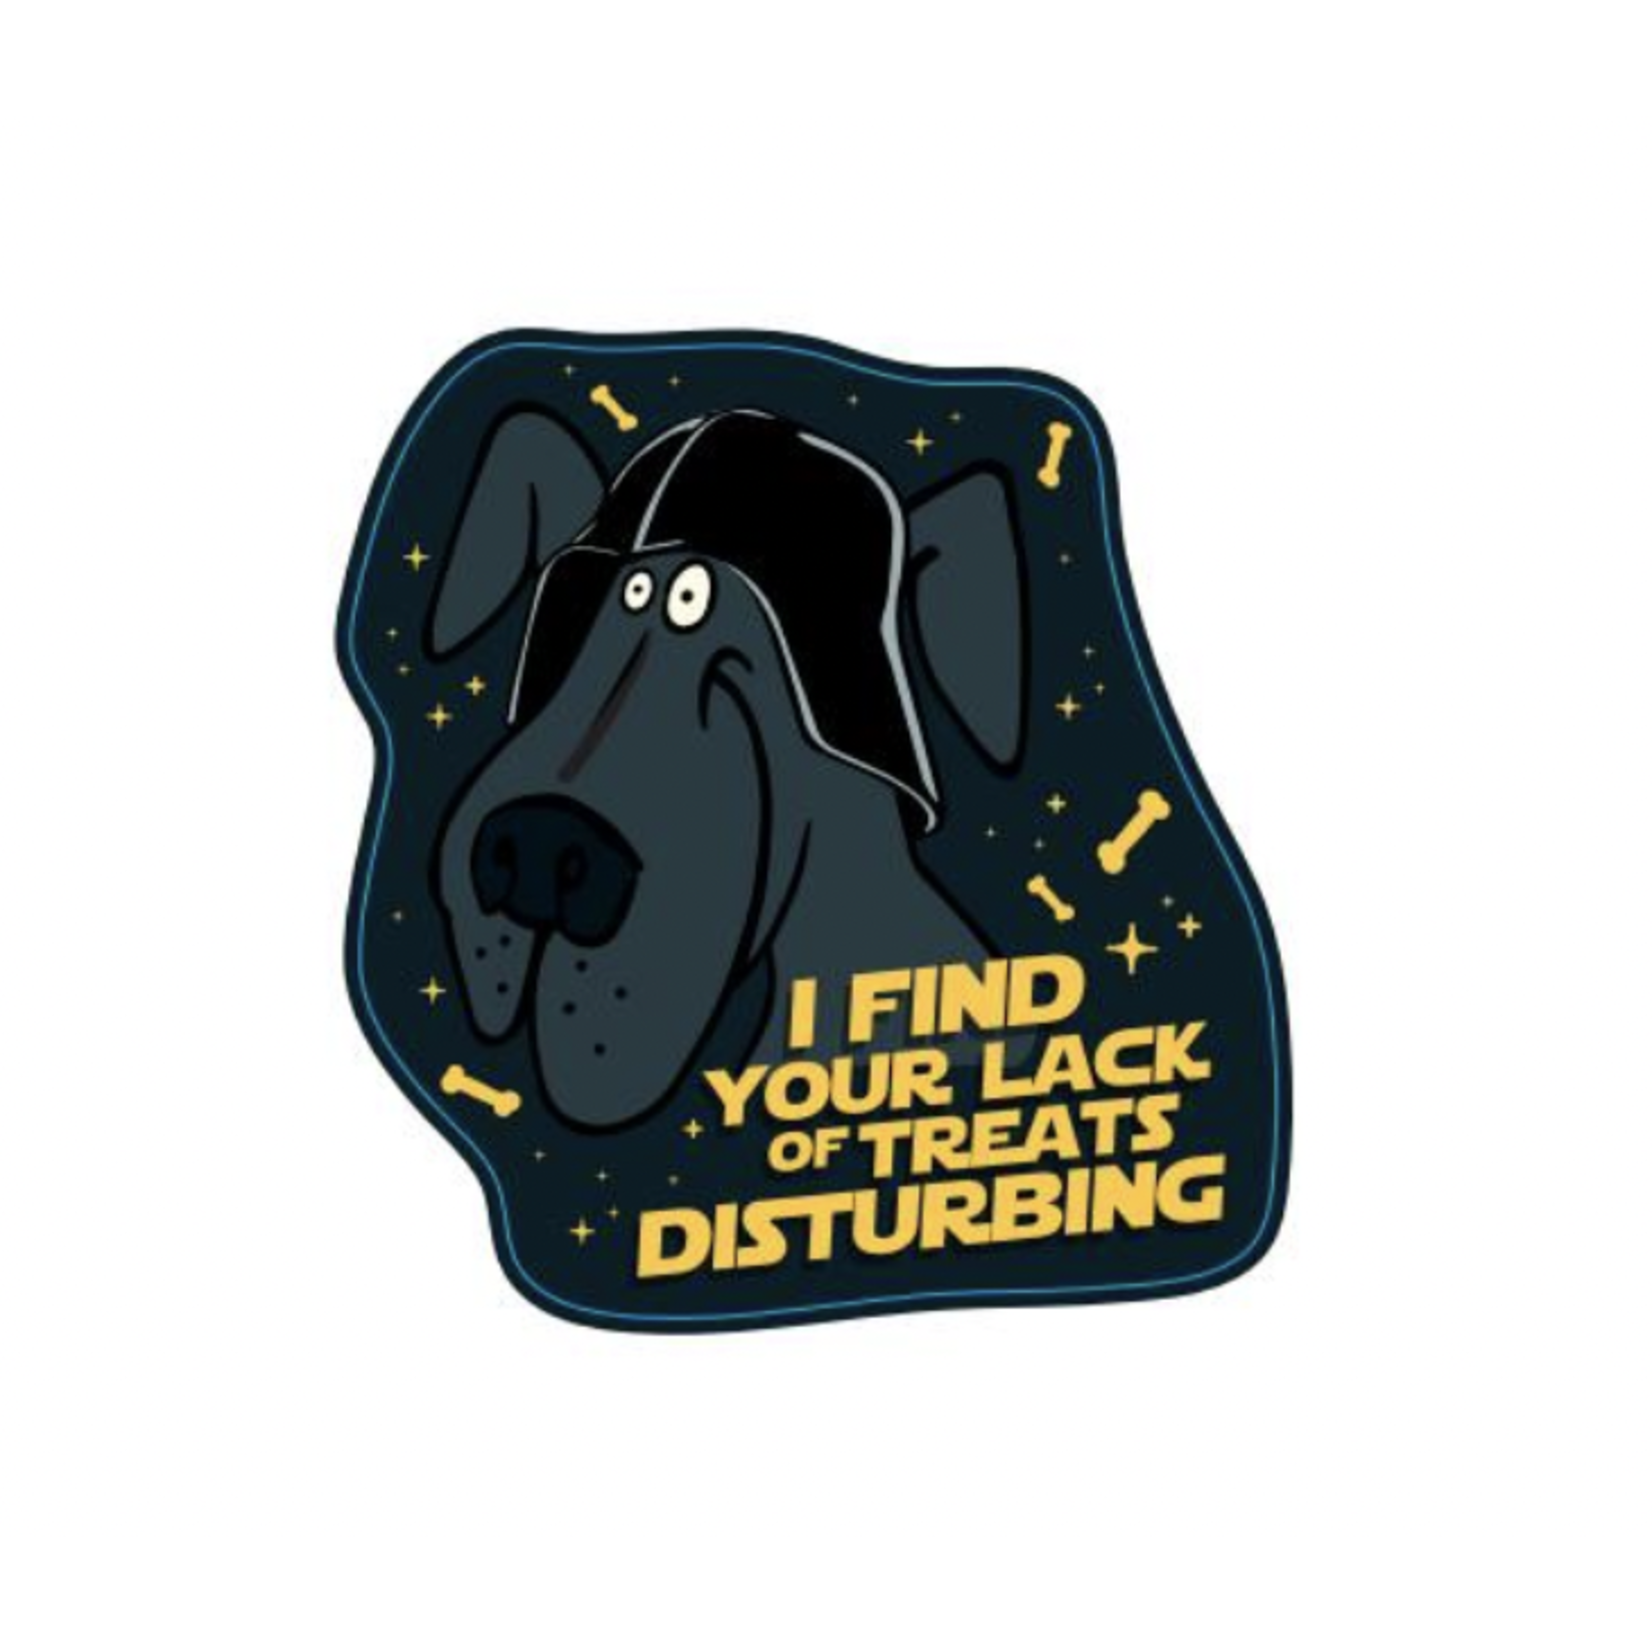 STICKER PACK Dog Sayings - Lack of Treats Disturbing - Sticker - Small